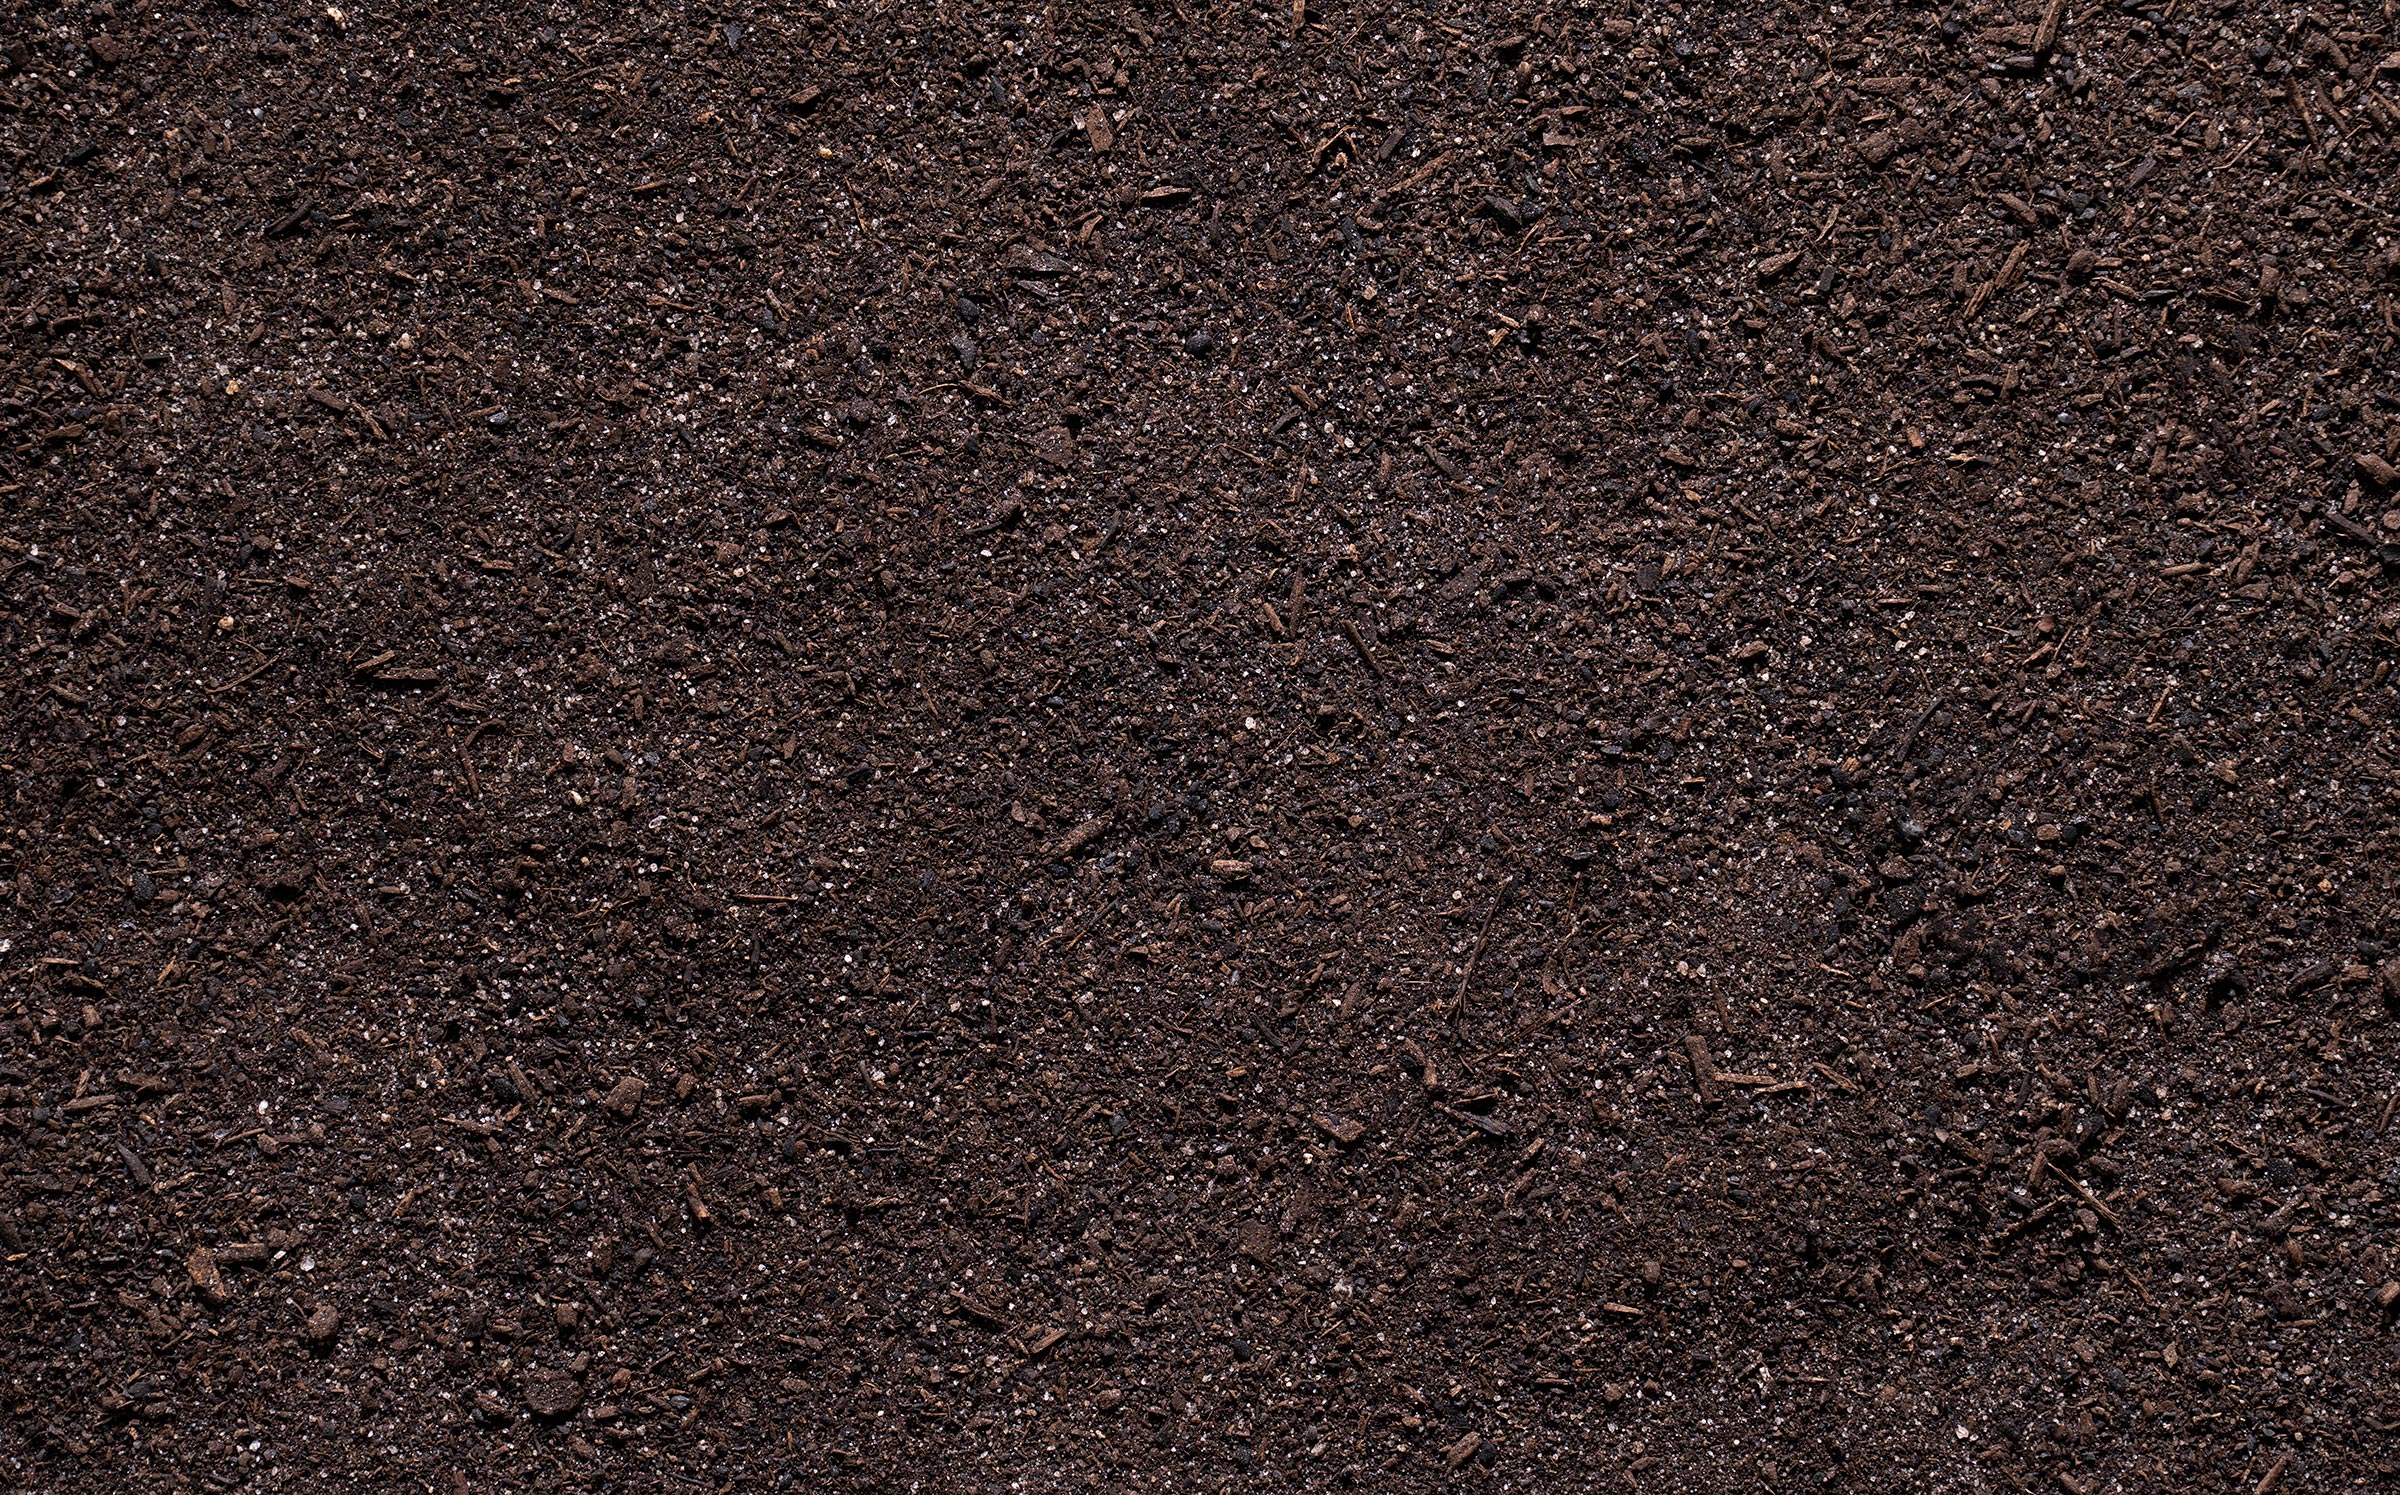 Wakefield BioChar Garden Premium Compost for Healthier Soil 1 Cubic Feet Bag - image 4 of 5